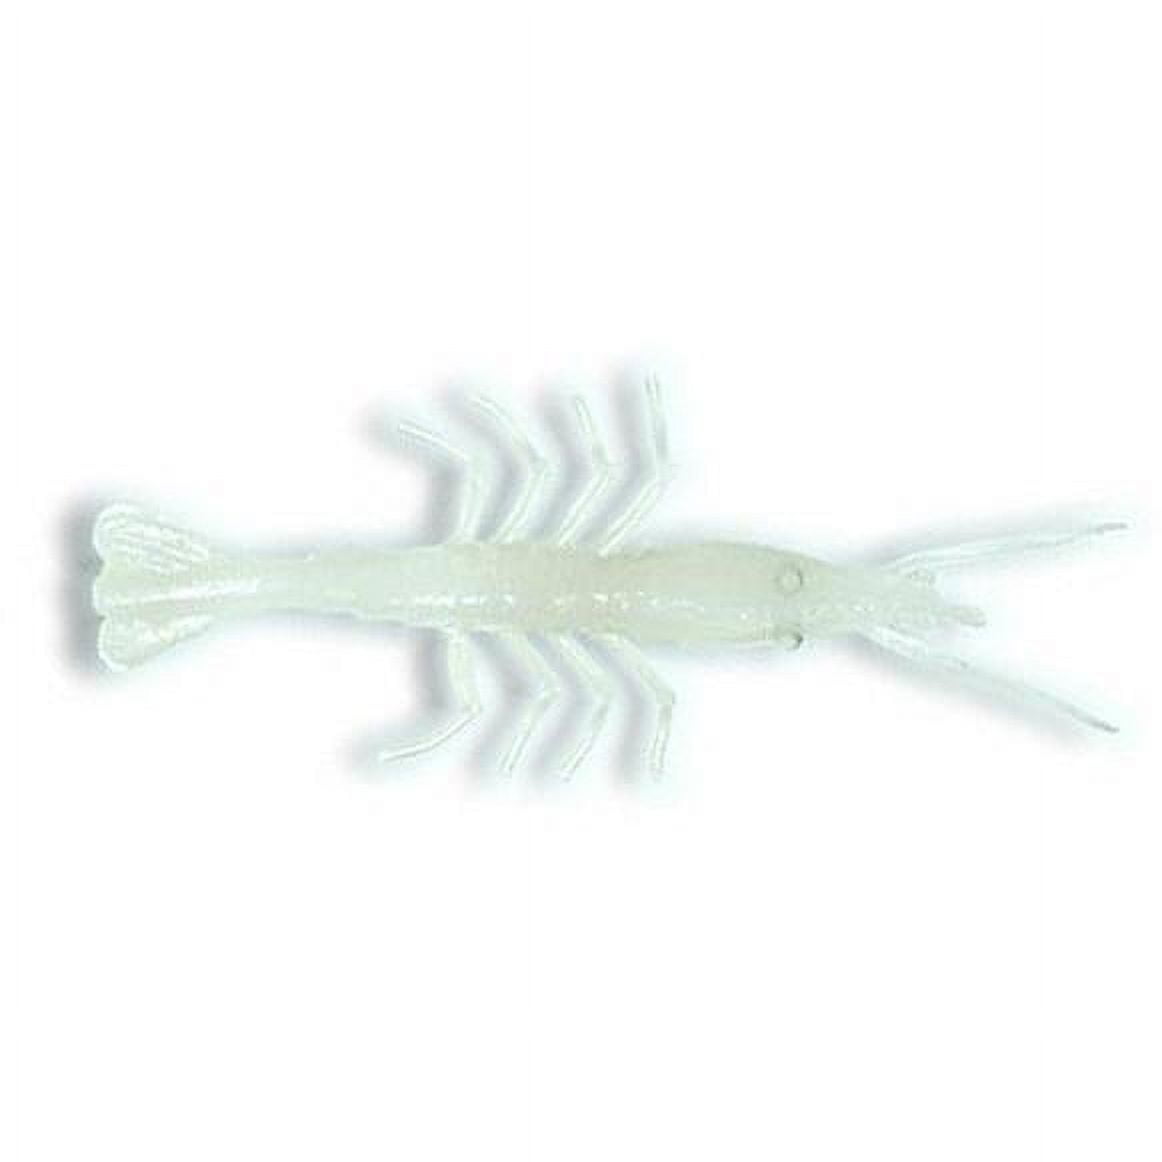 Z-Man Scented ShrimpZ 4 inch Soft Plastic Shrimp